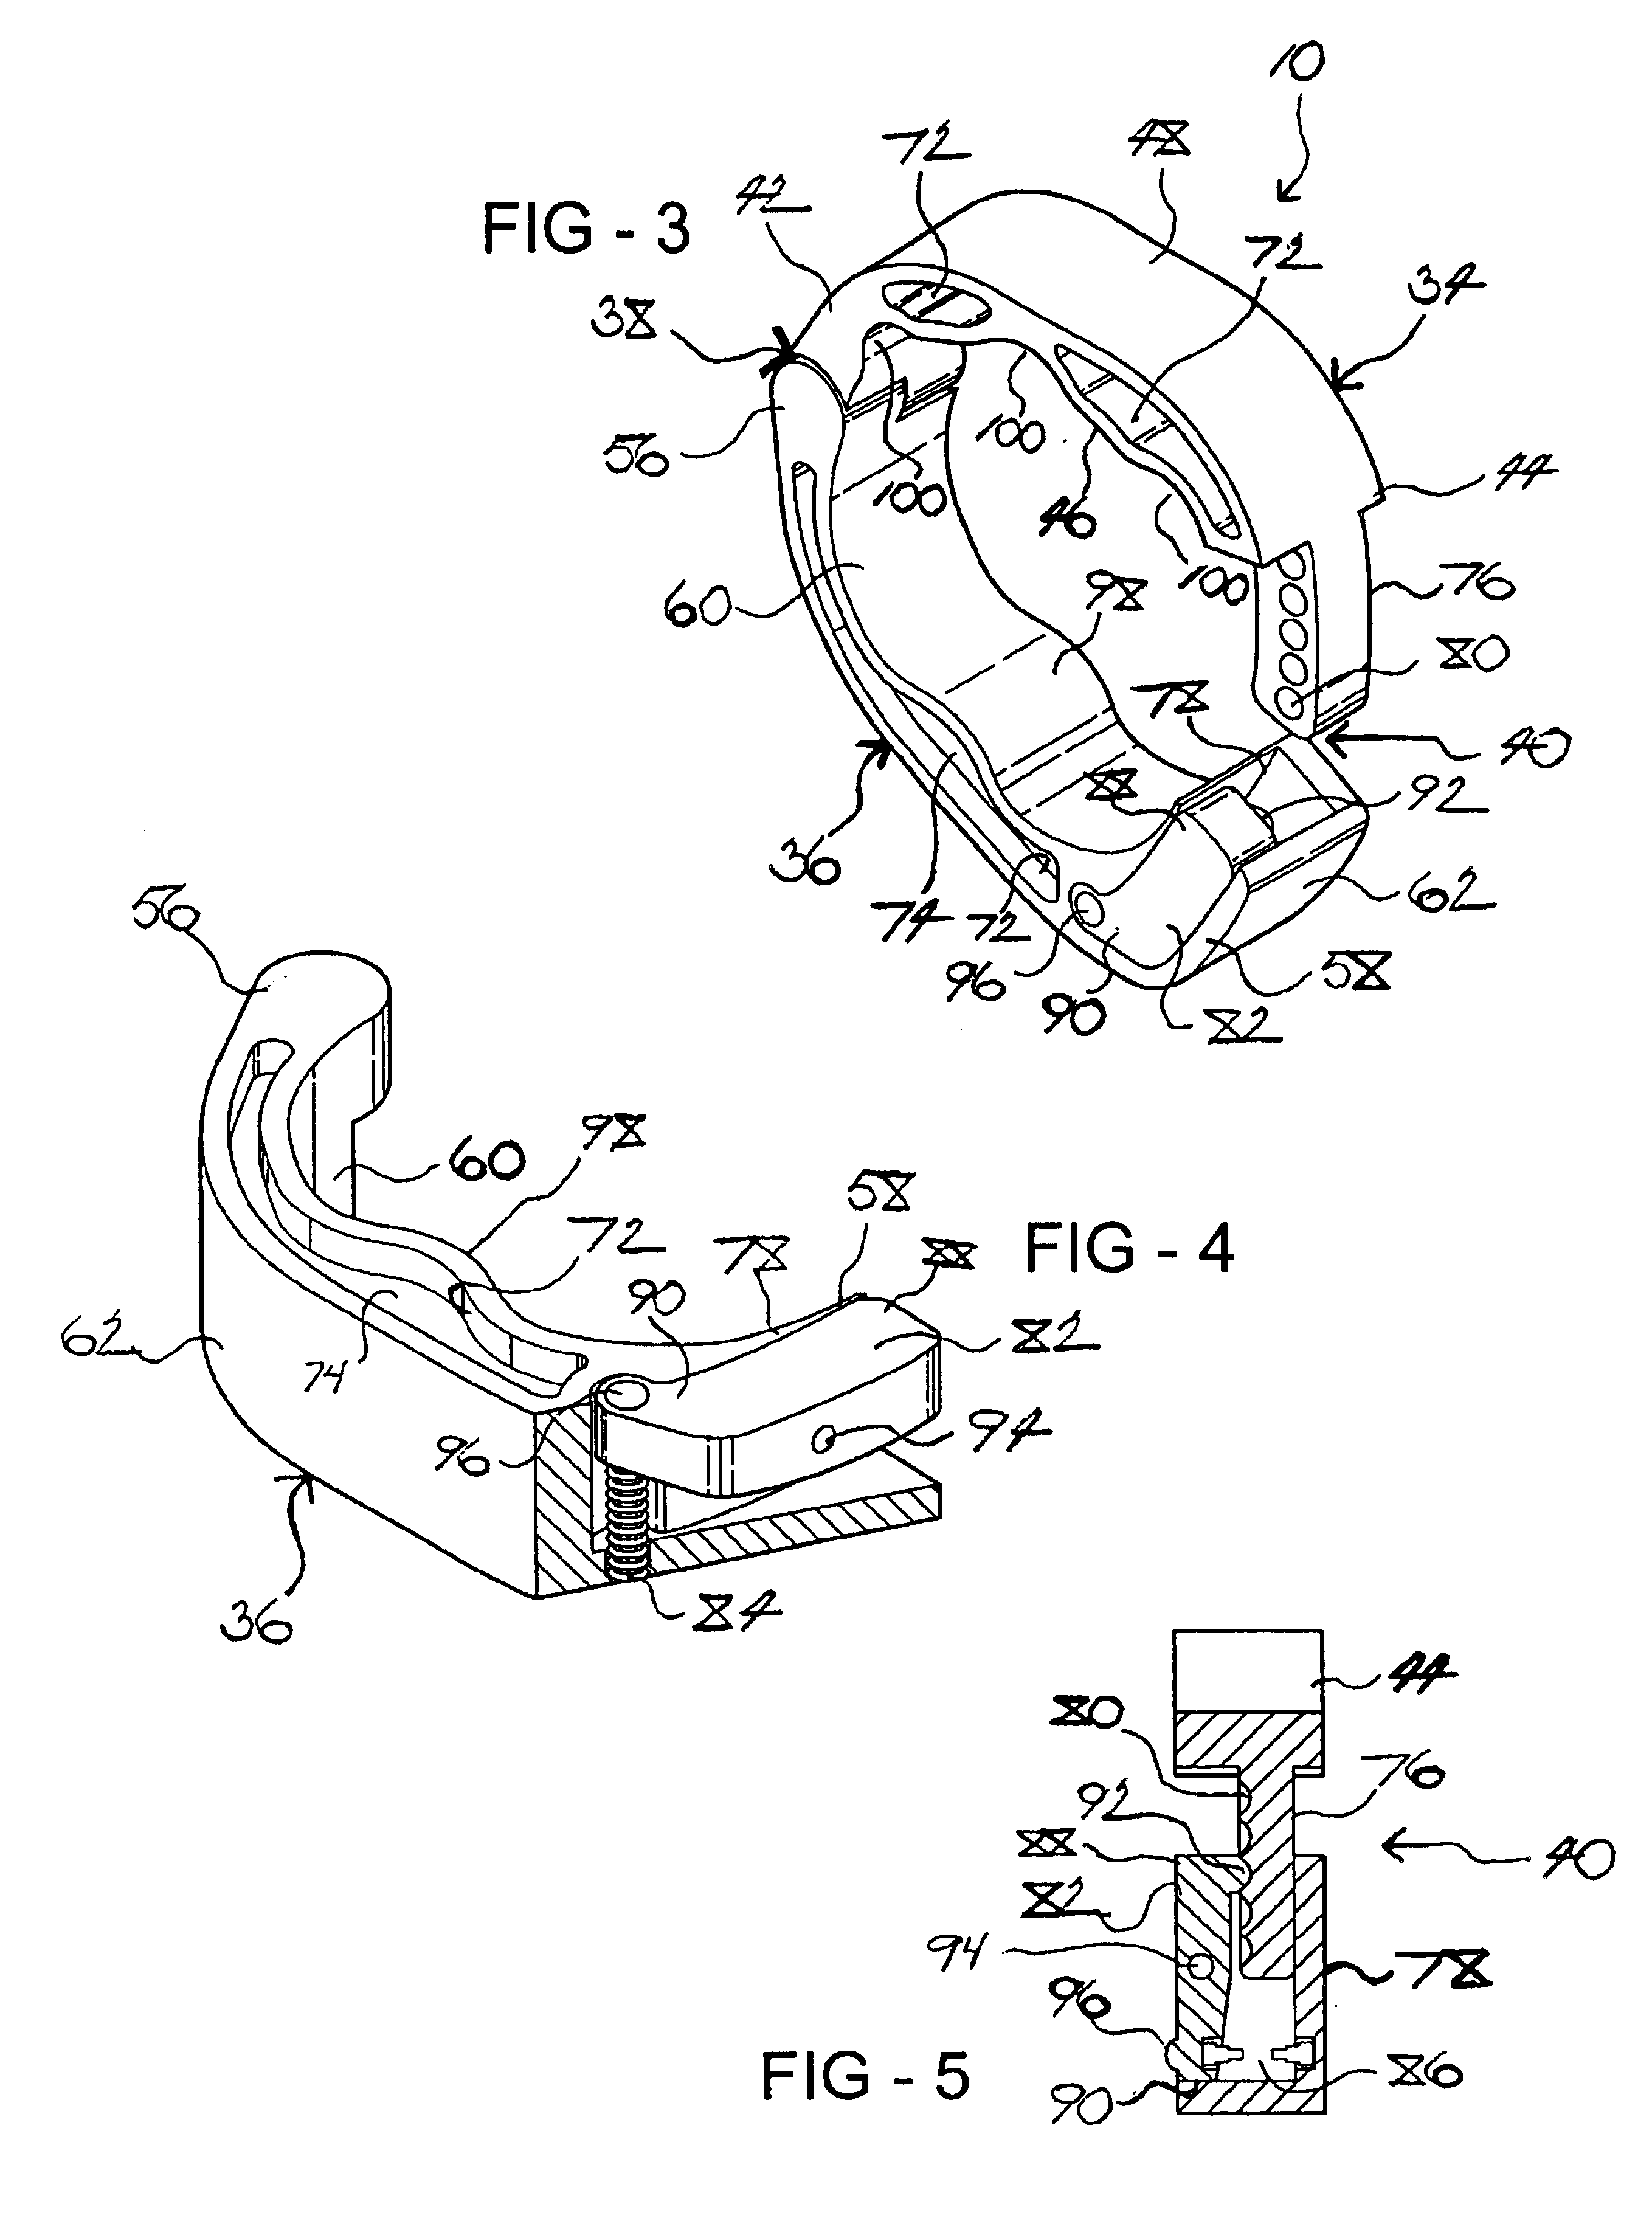 Urinary-control device